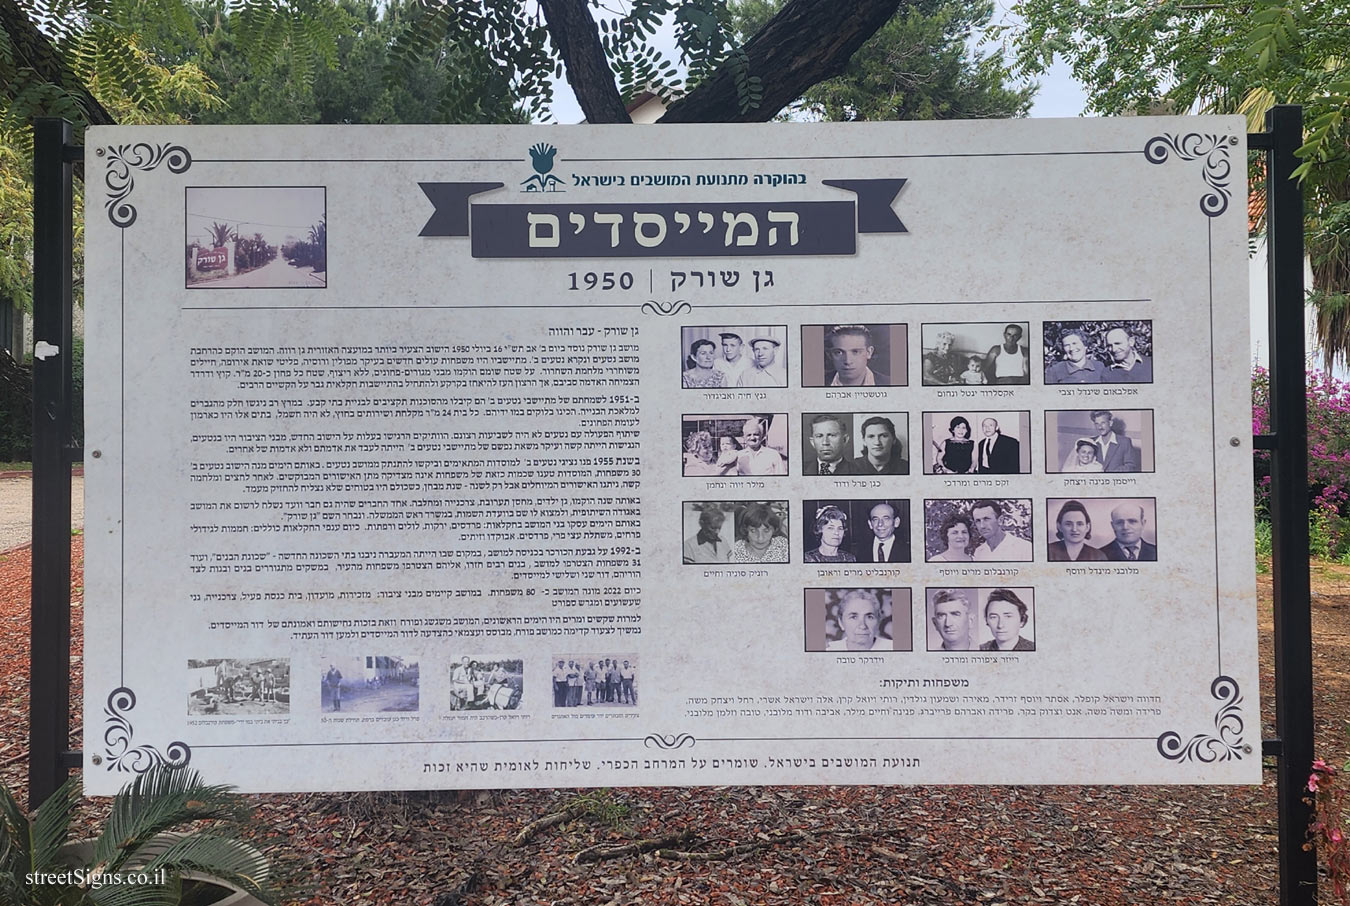 Gan Sorek - the history of the moshav and its founders